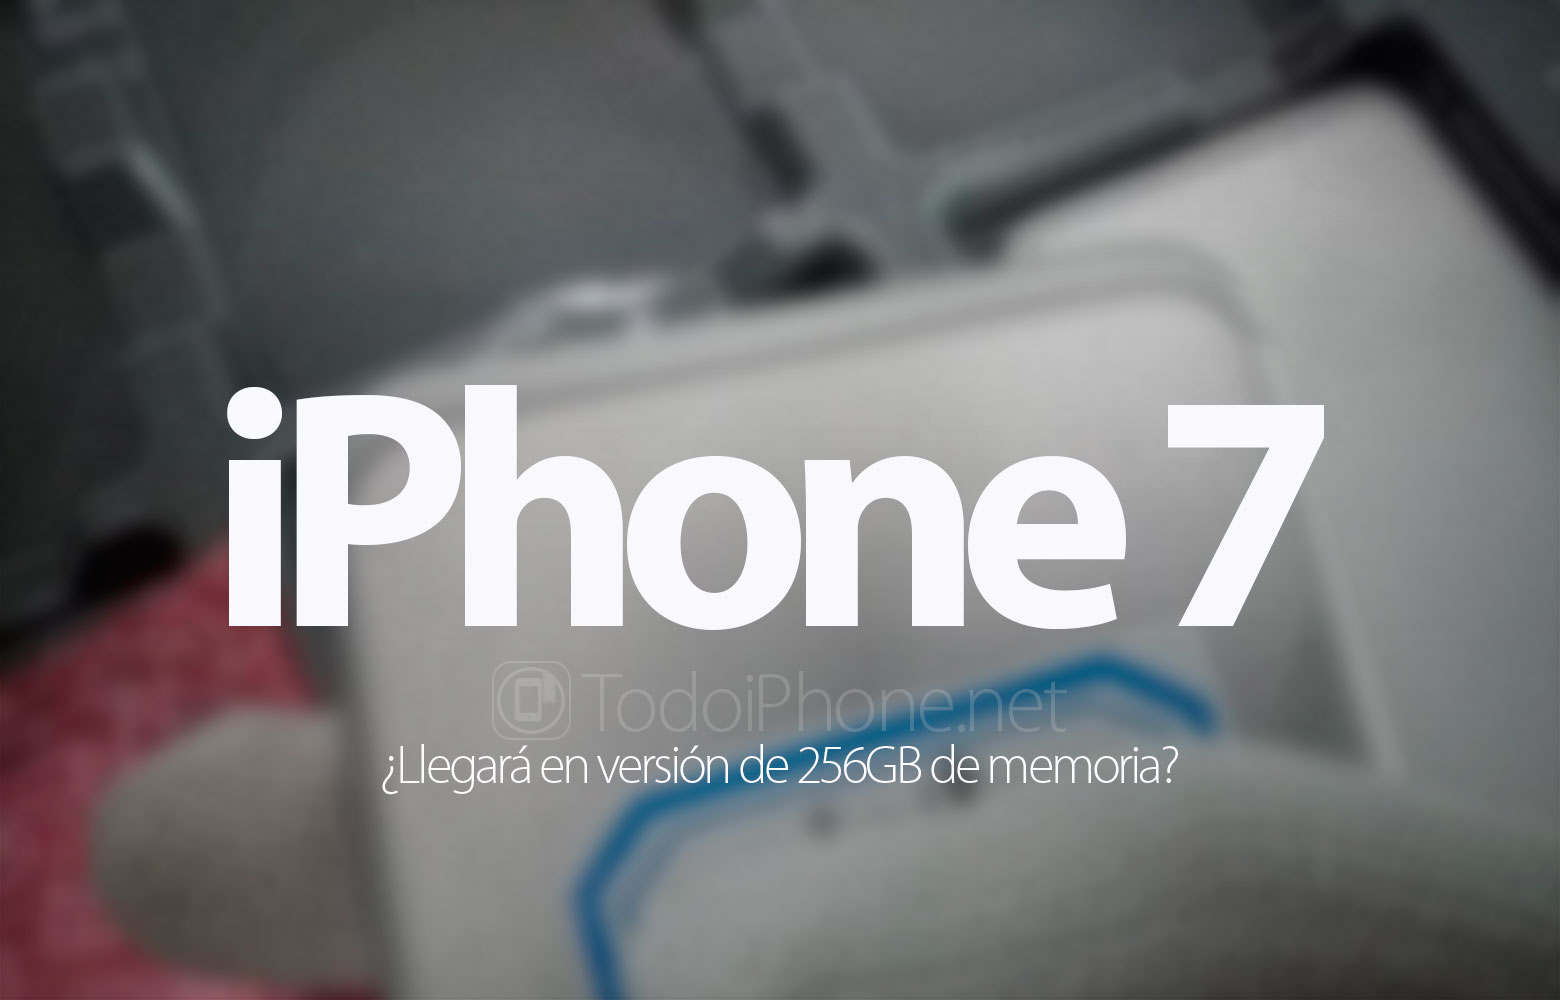 iphone-7-llegara-tambien-version-256gb-memoria